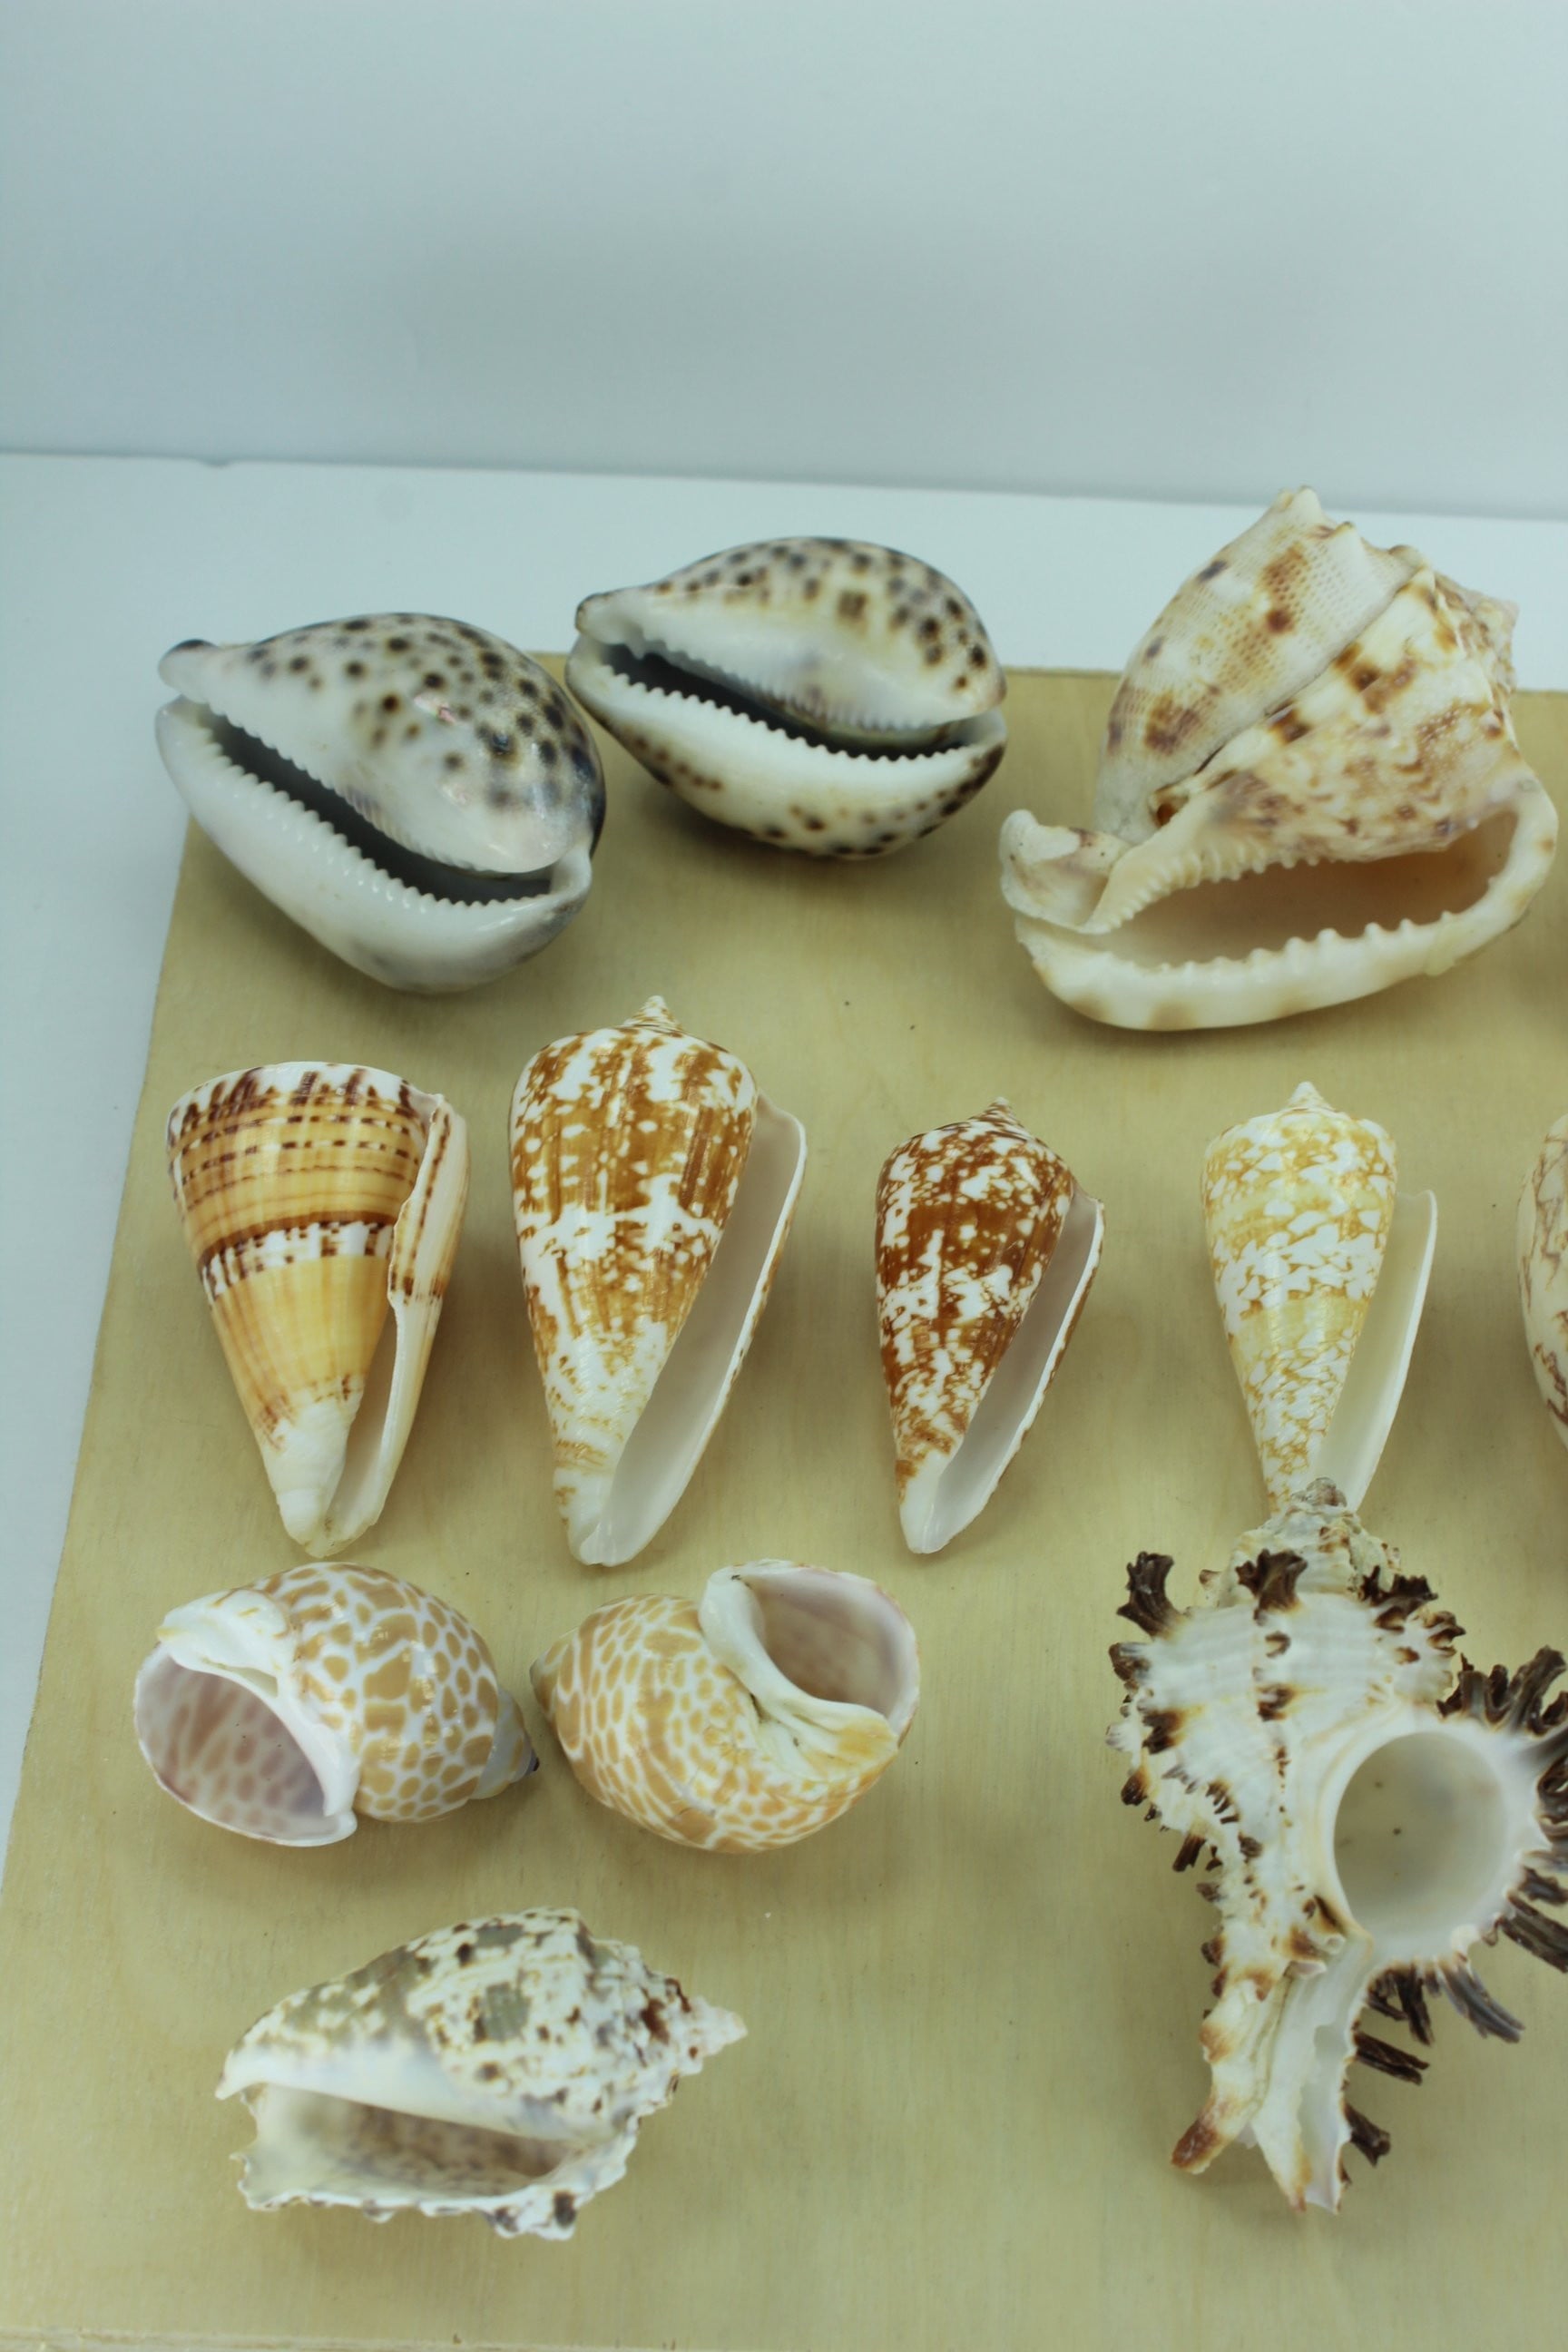 Florida Natural Shells 15 Vintage Estate Collection Shell Art Collectibles Wreaths Aquarium natural